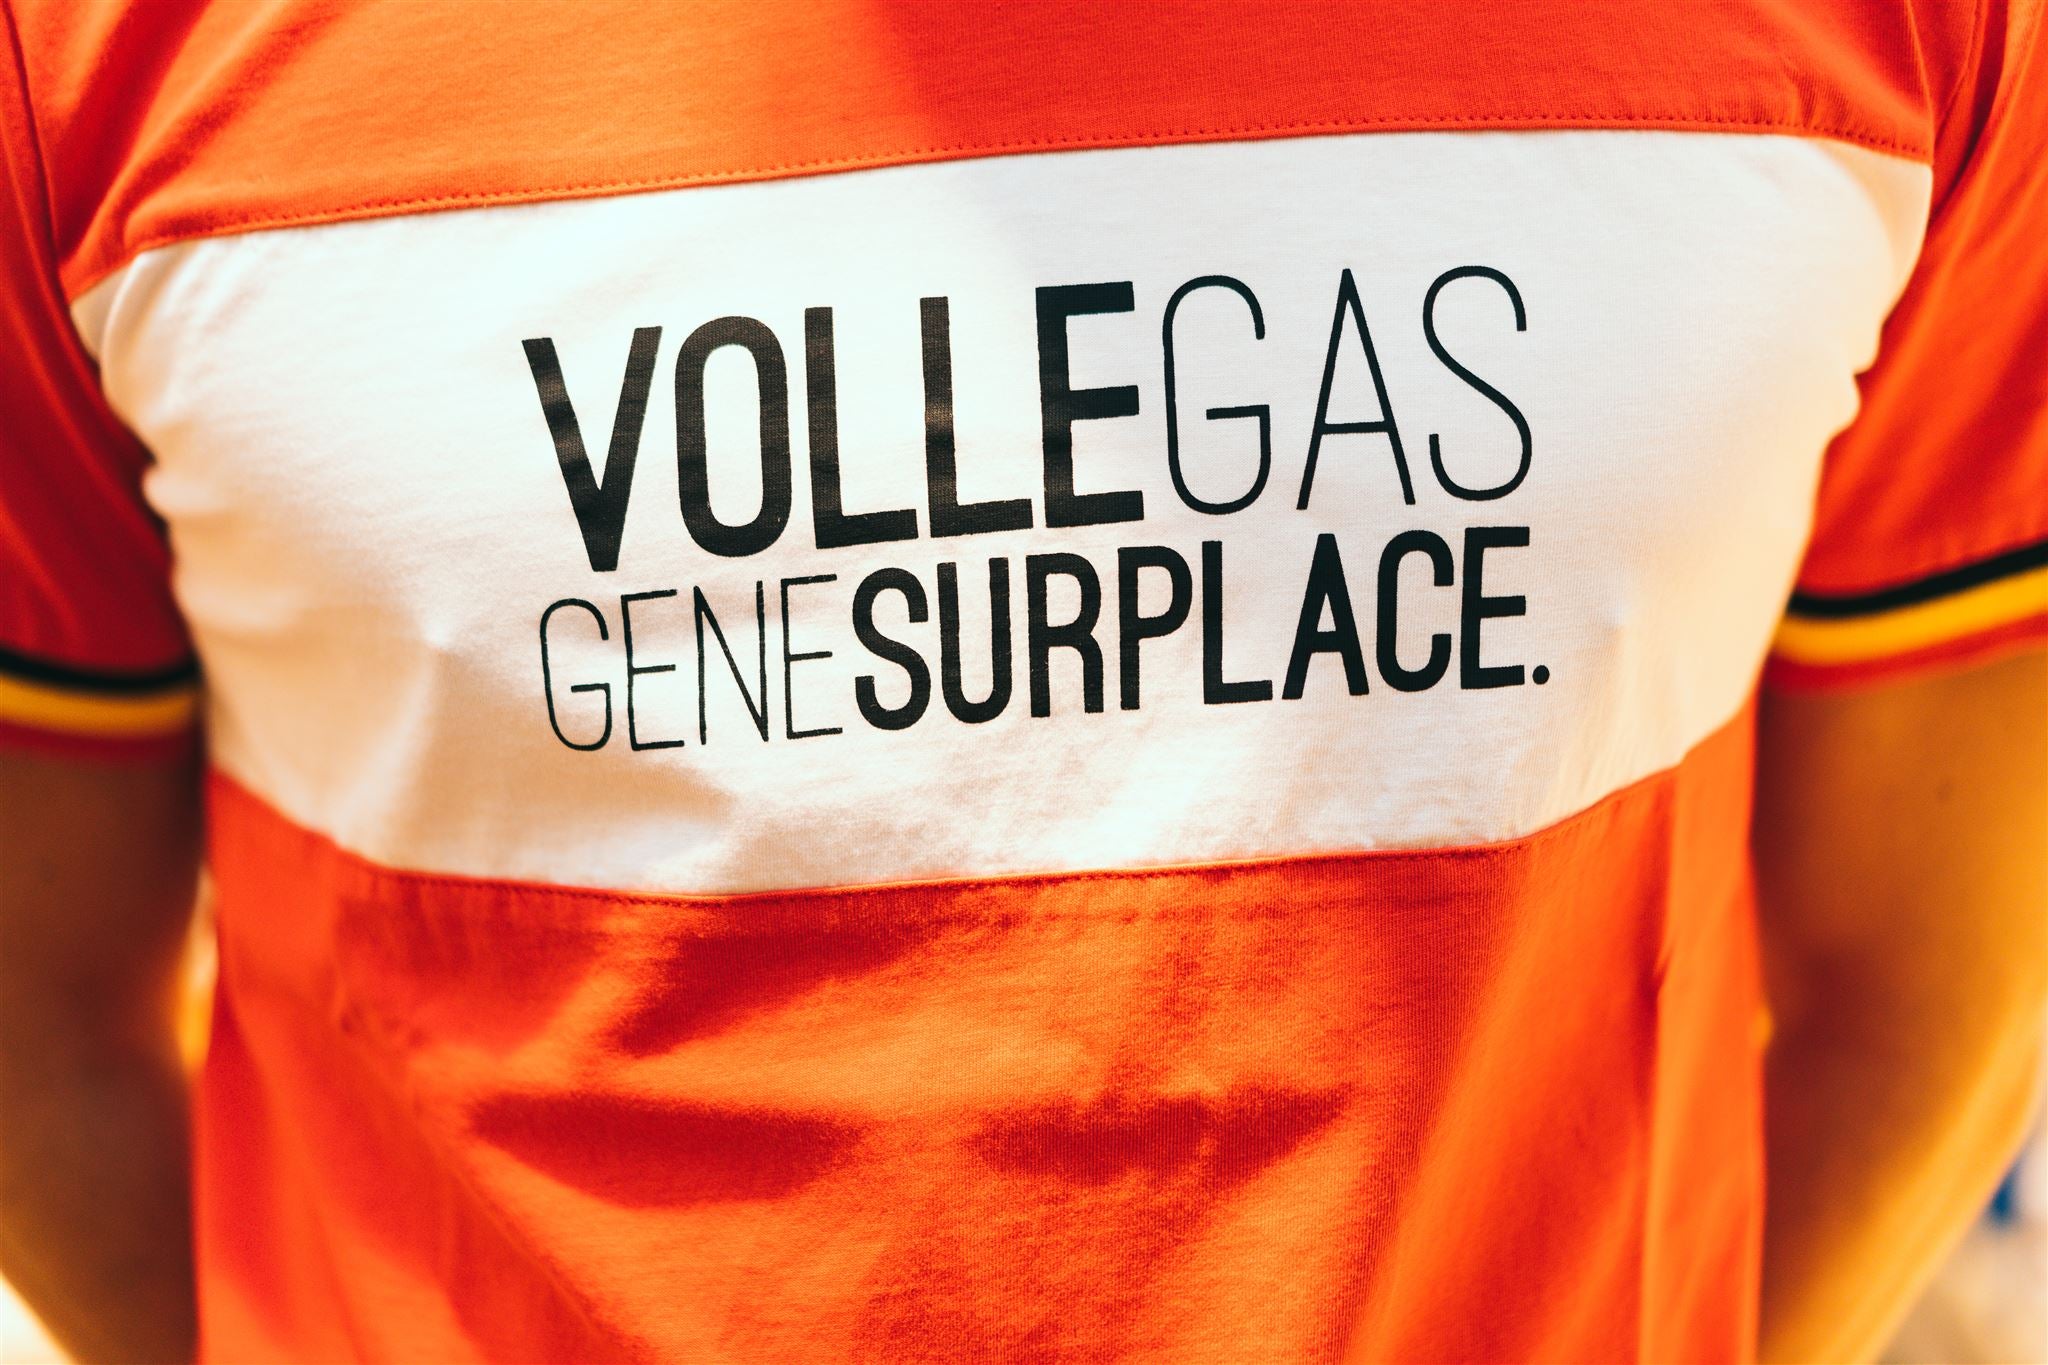 T-shirt • Volle gas, gene surplace • Rood • Unisex